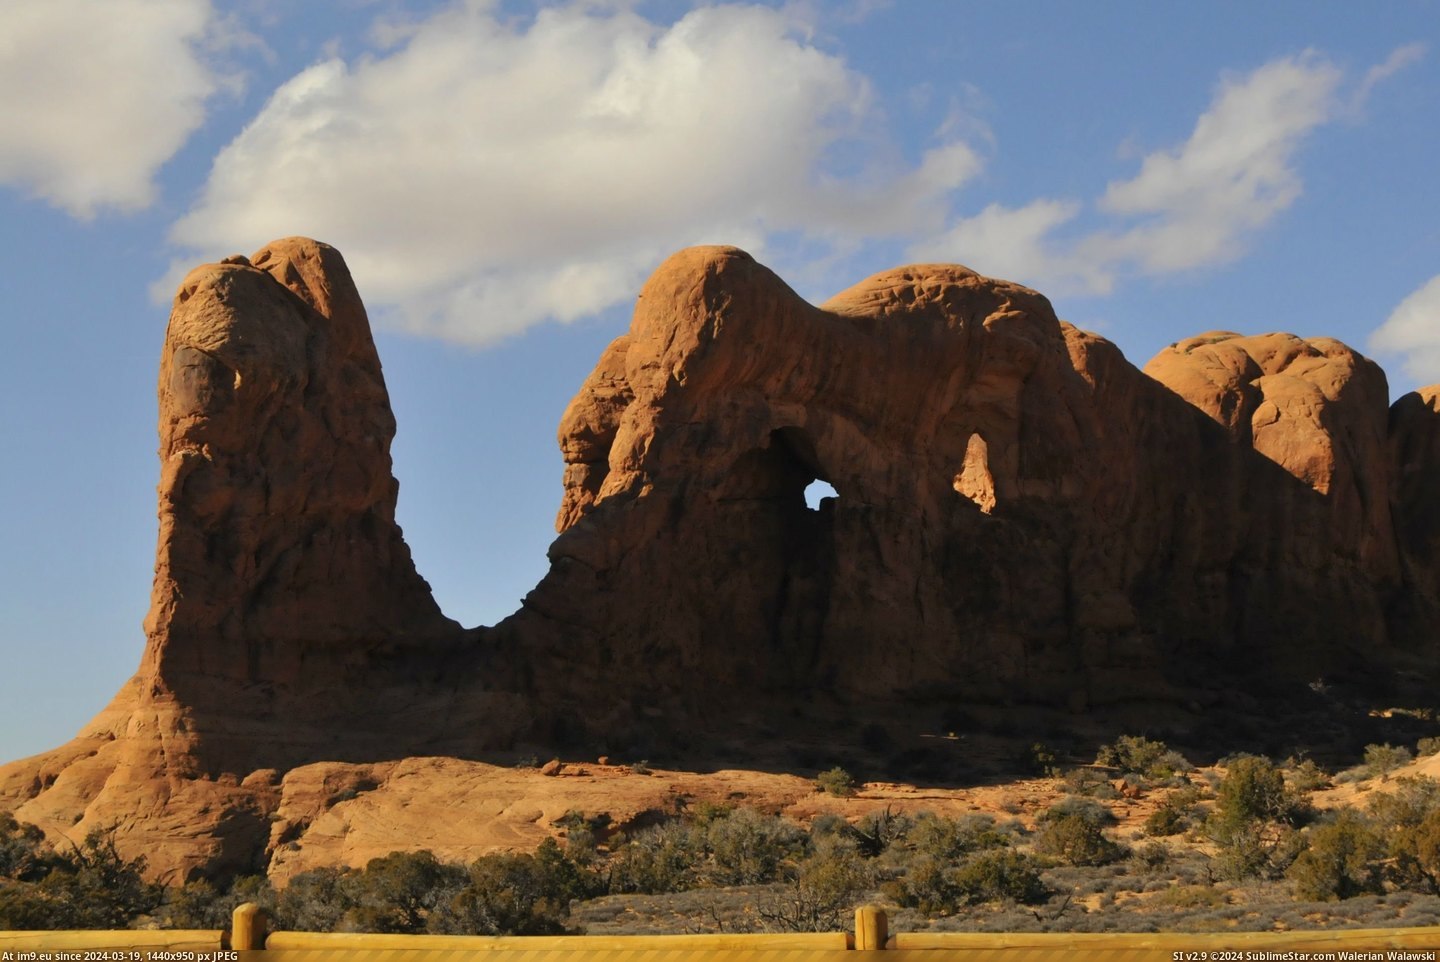 #Shot #Saw #Elephant #Moab #Rock #Utah [Earthporn] Elephant Rock i saw and shot in Moab, Utah. [2894x1922] Pic. (Изображение из альбом My r/EARTHPORN favs))